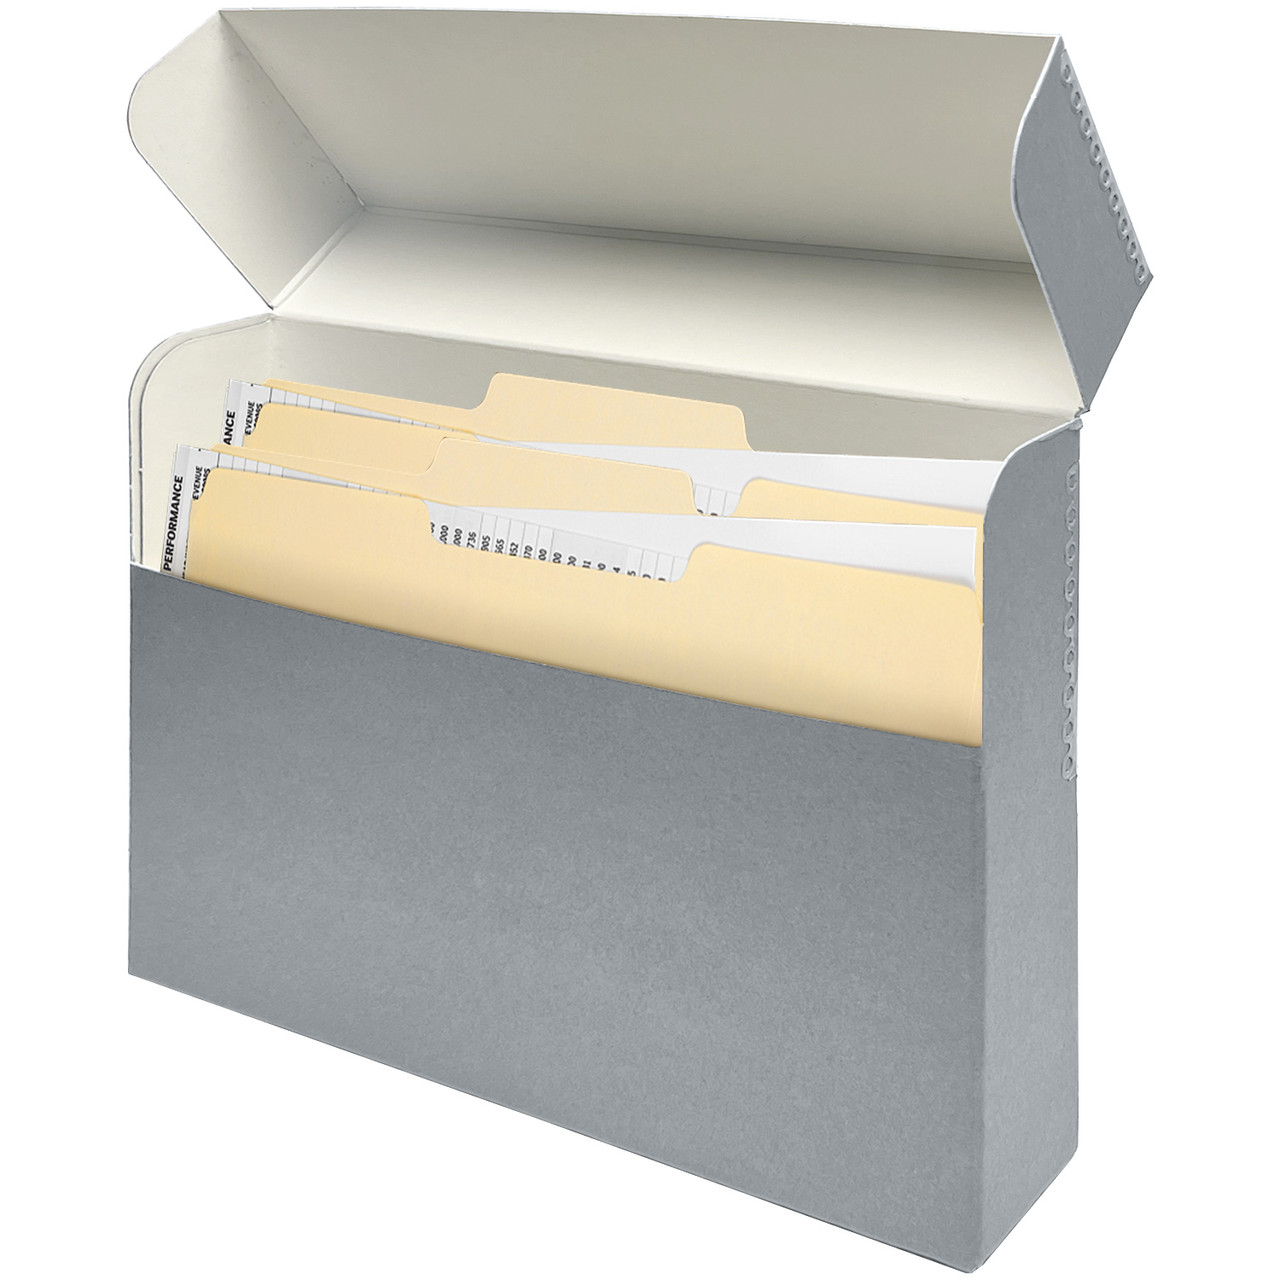 Lineco Legal 15.5 x 10.5 x 2.5 wide Archival Document Storage